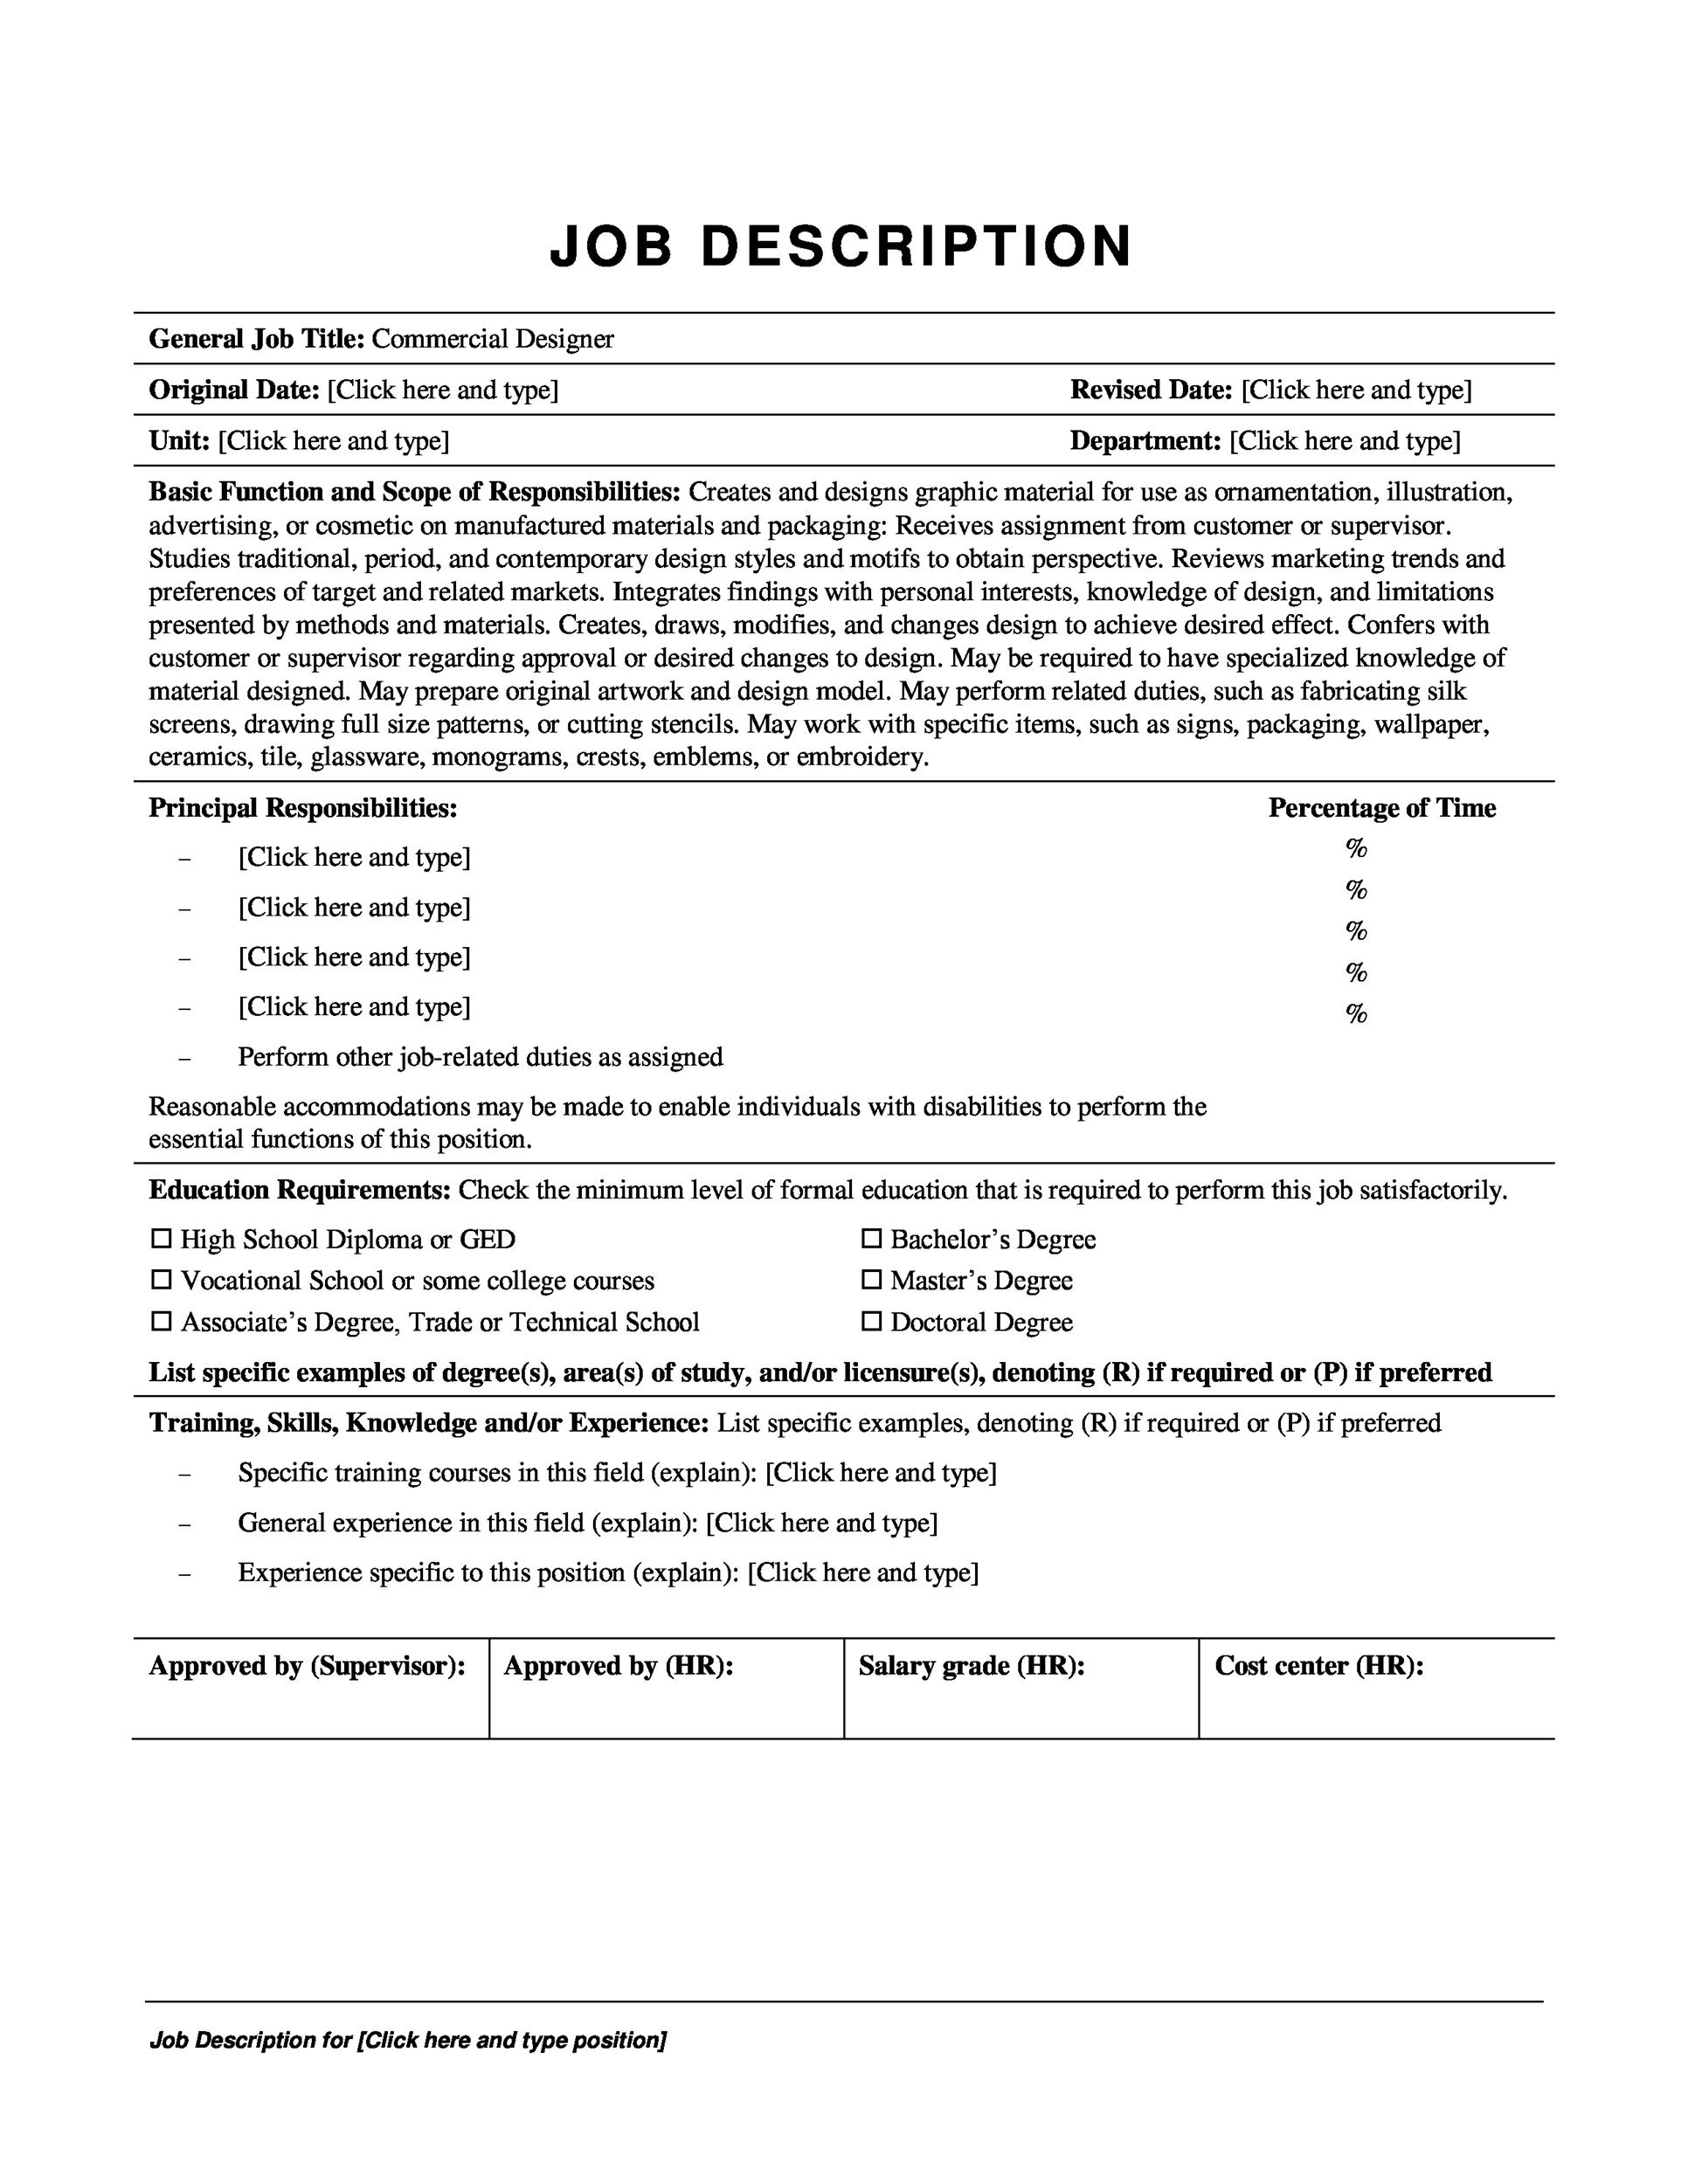 research and evaluation job description